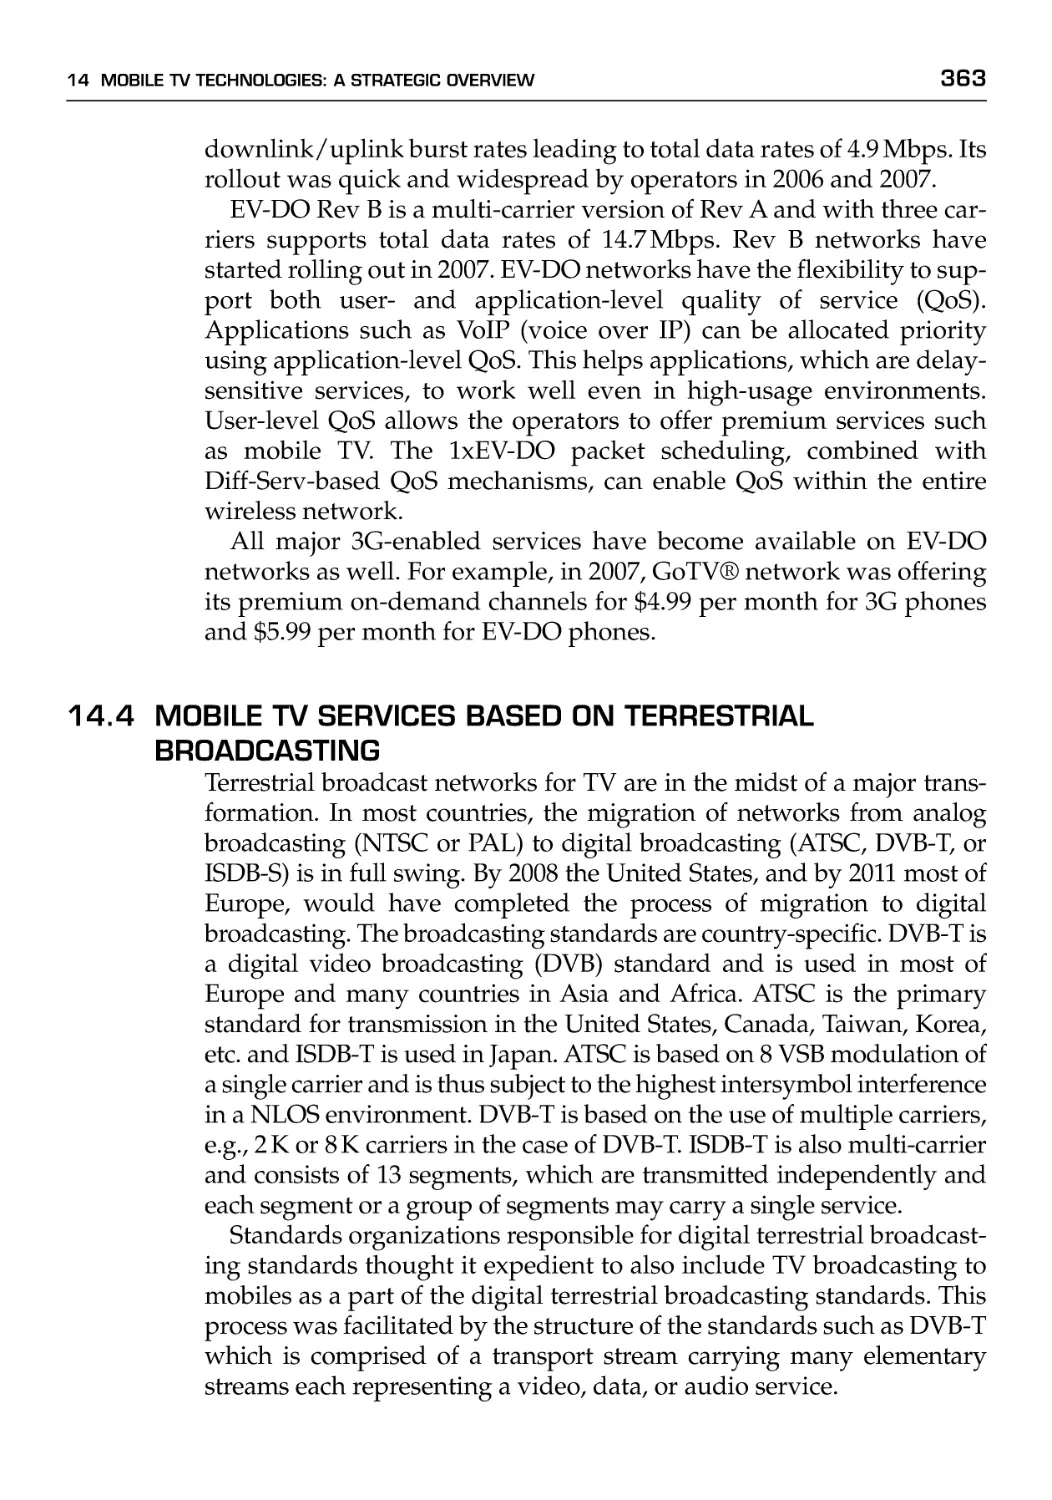 14.4 Mobile TV Services Based on Terrestrial Broadcasting